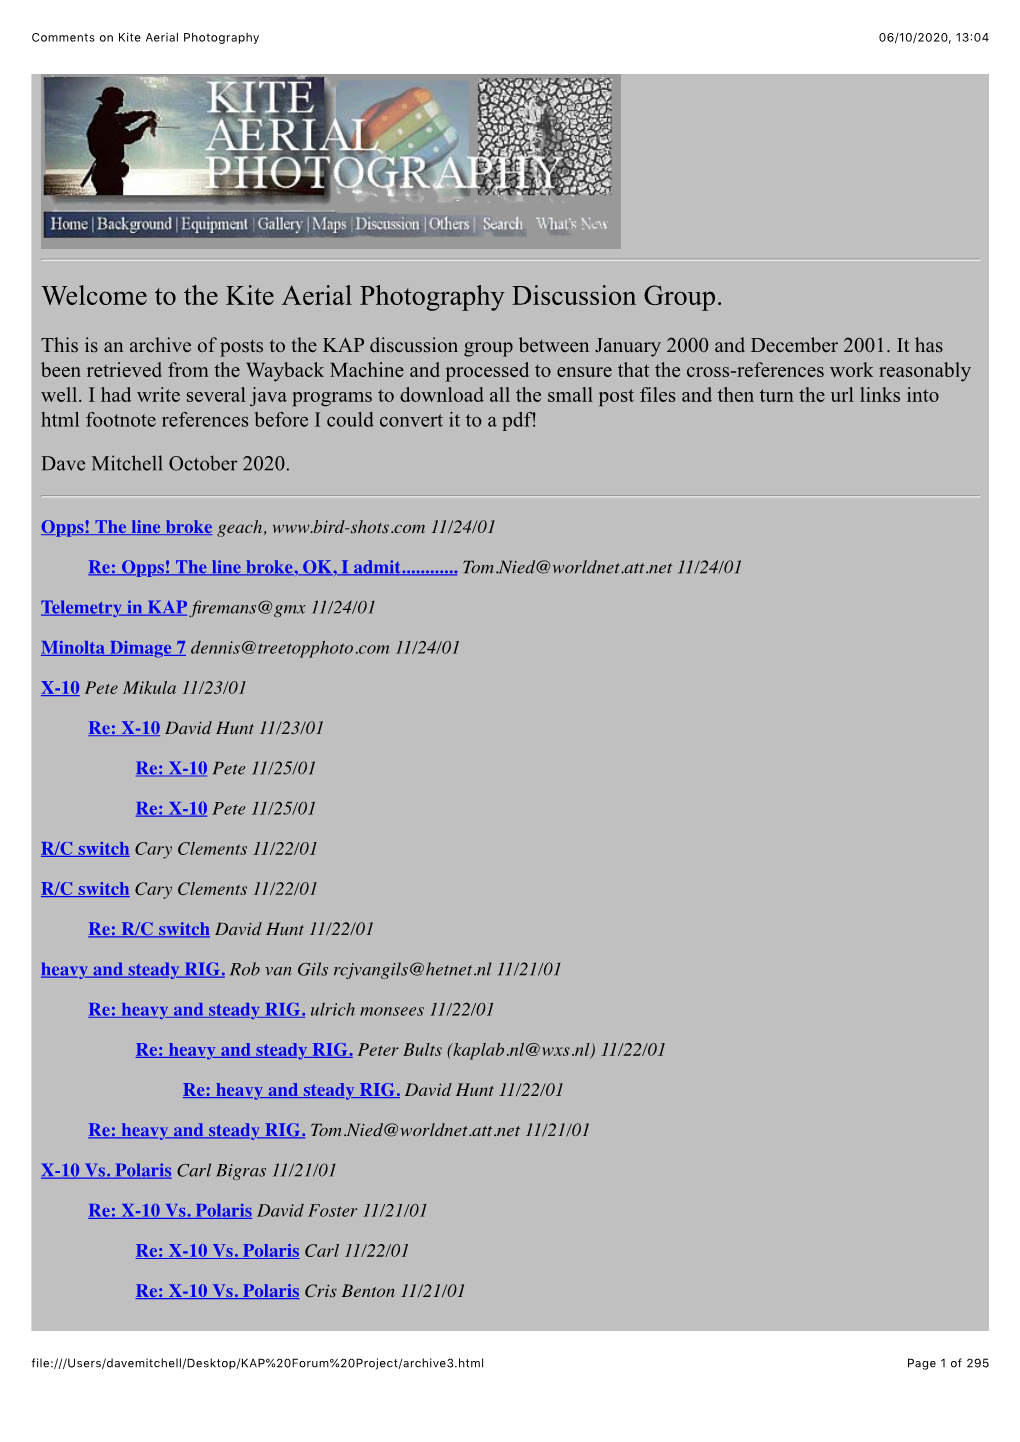 2000-2001 Archive (800 Comments)